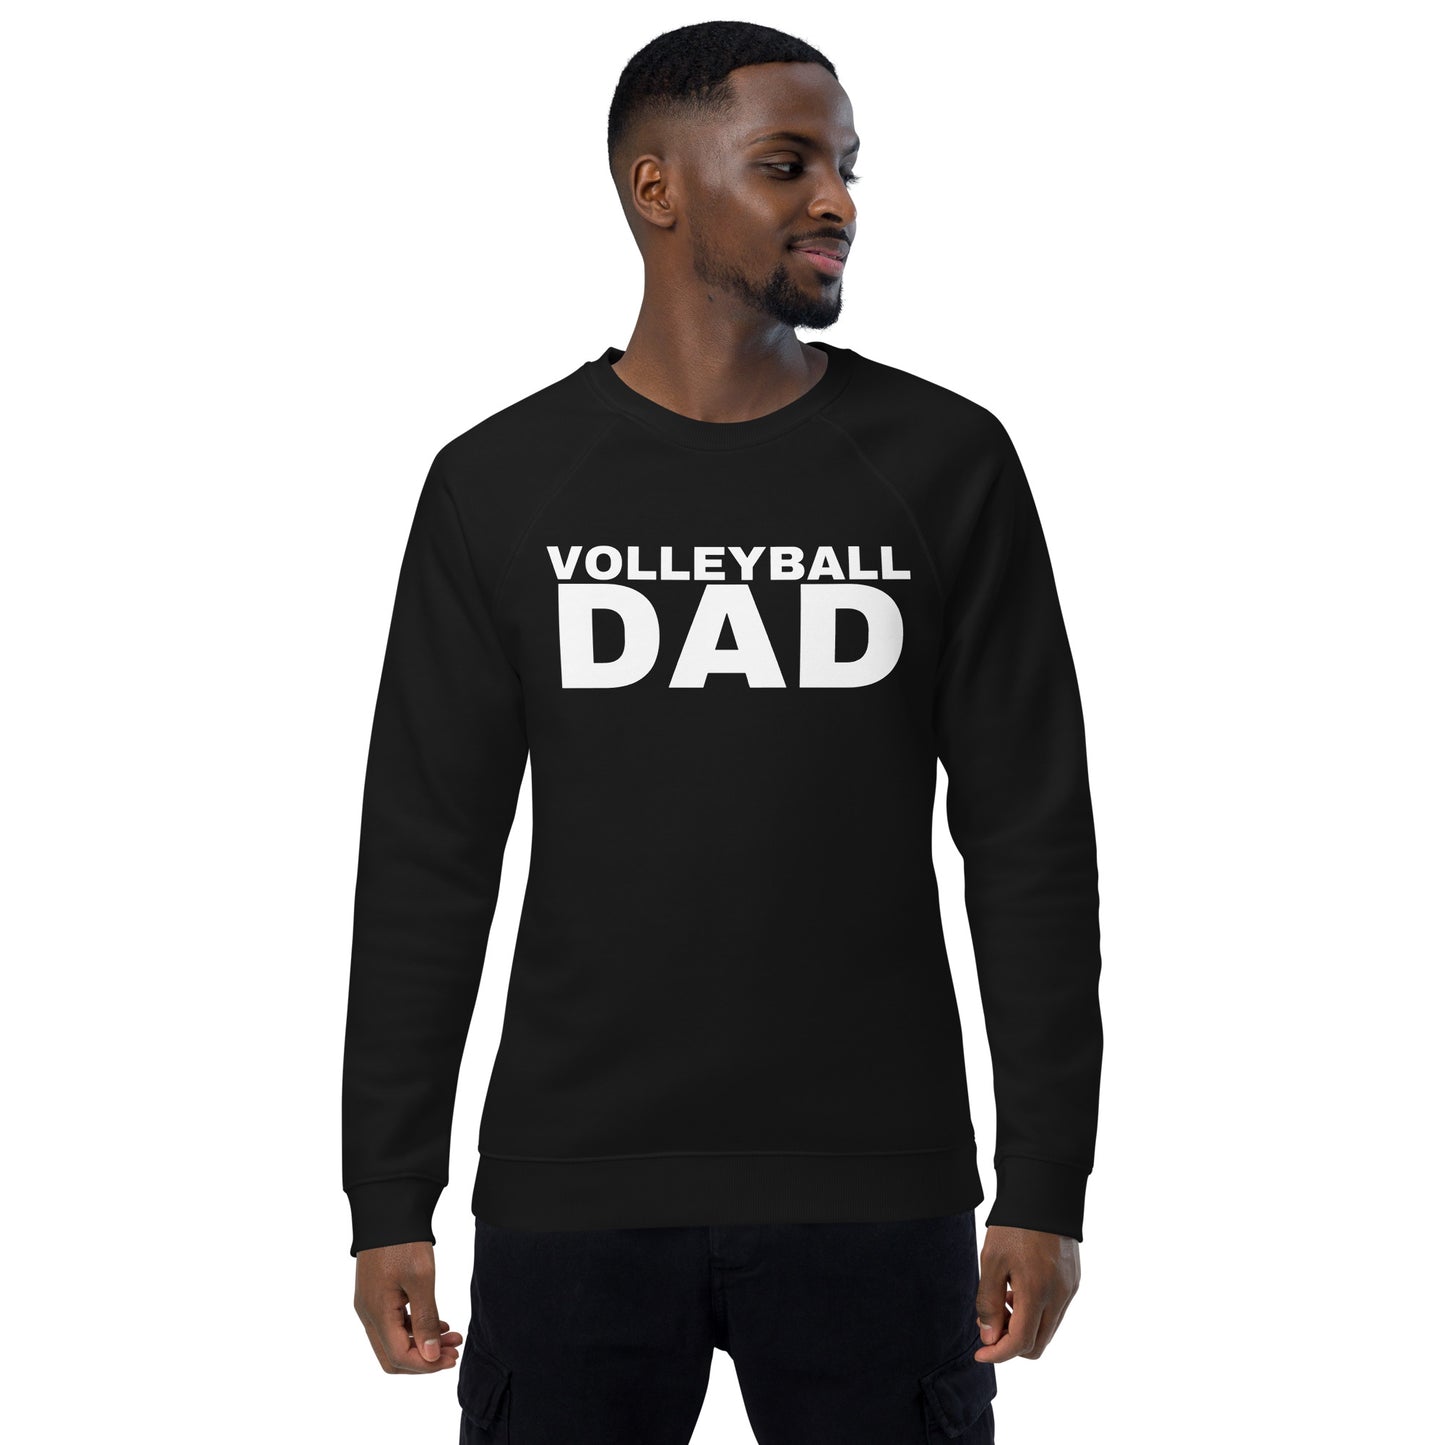 Volleyball Dad | Professional Line Judge - Unisex organic raglan sweatshirt